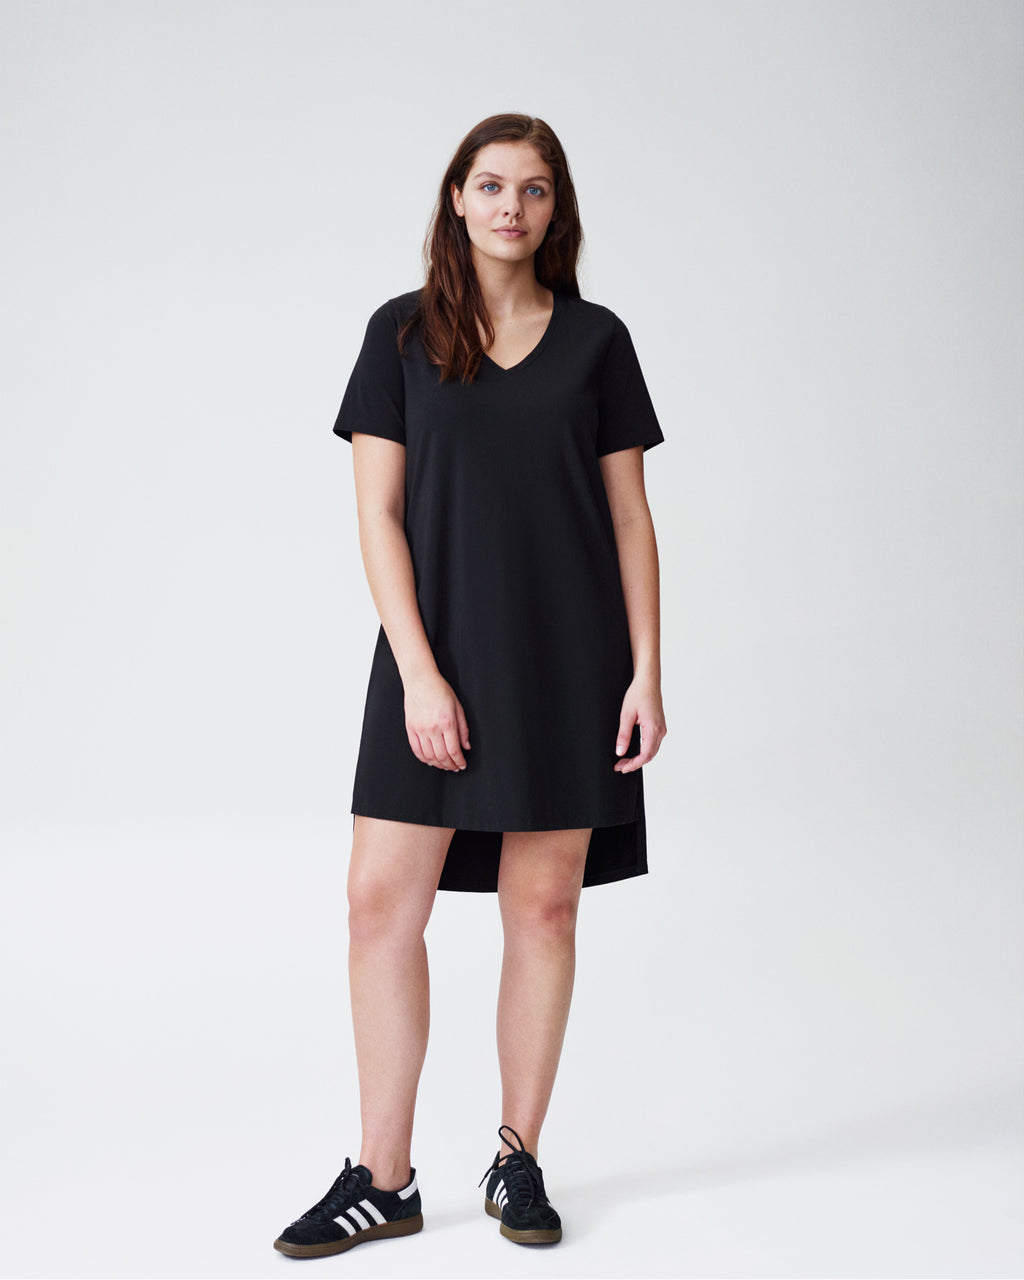 Black Sweatshirt Dresses - Women's T-Shirt Dresses, Misa Dresses